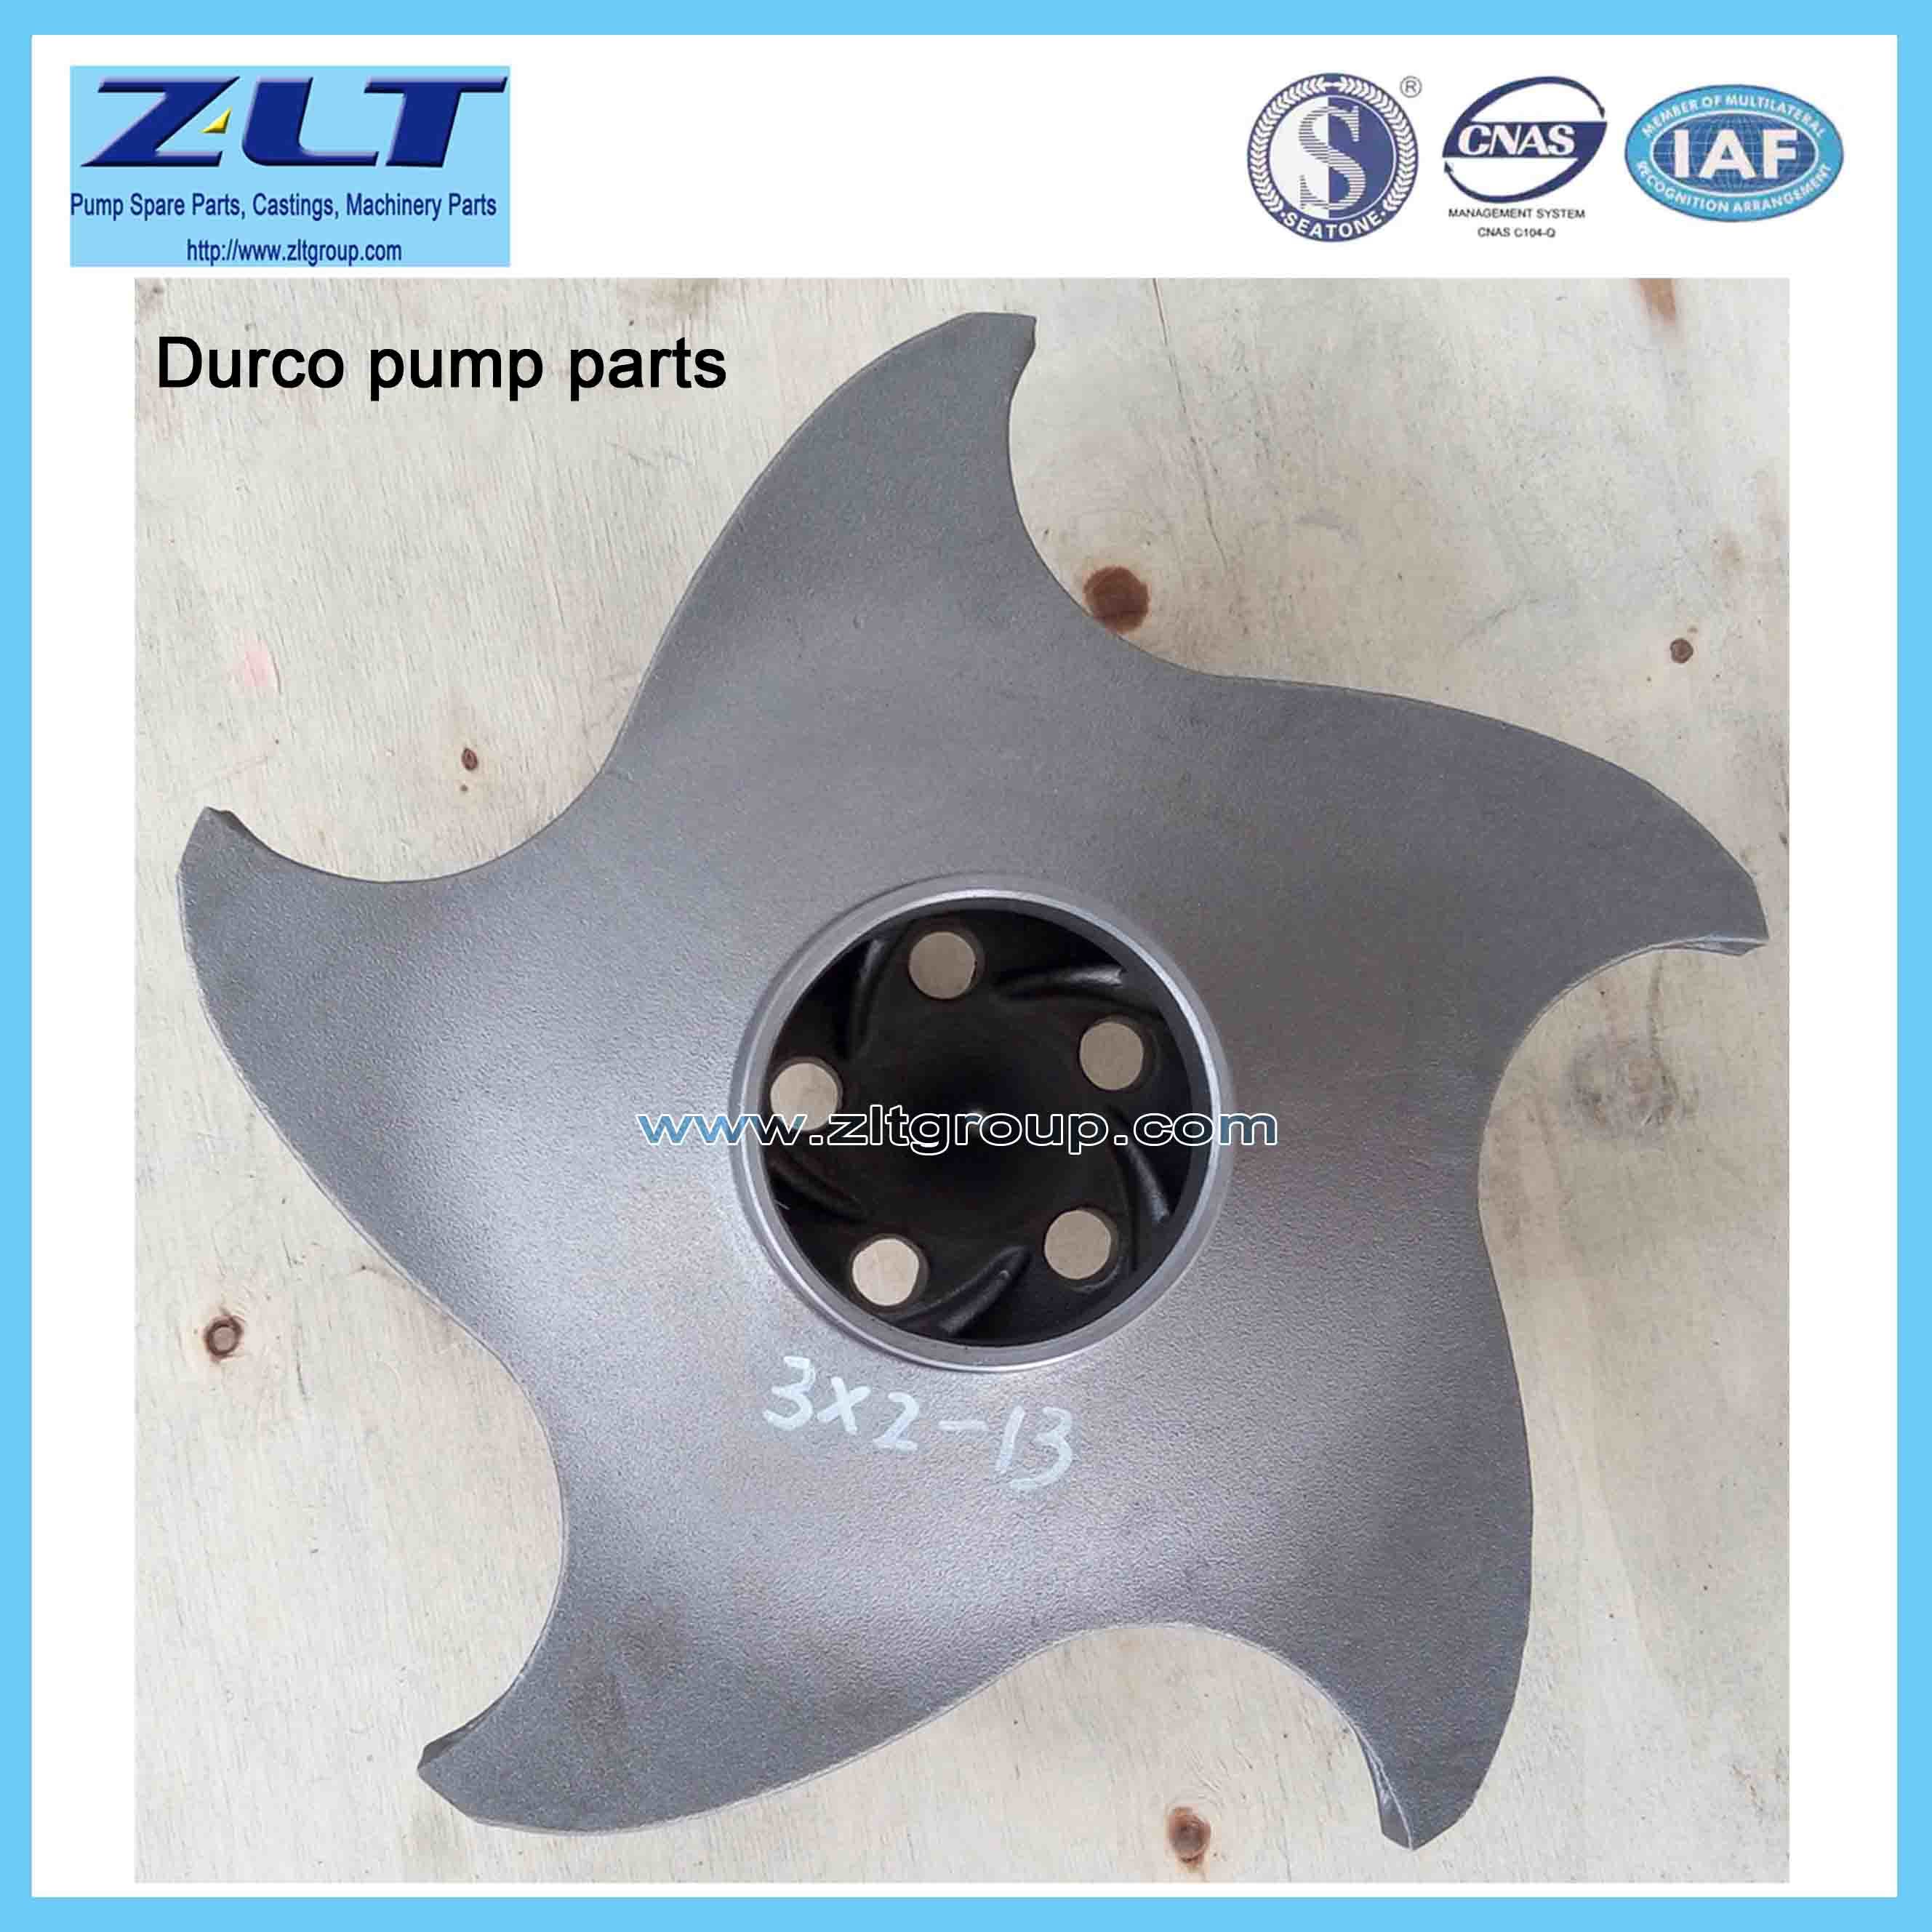 ANSI Chemical Durco Process Pump Parts